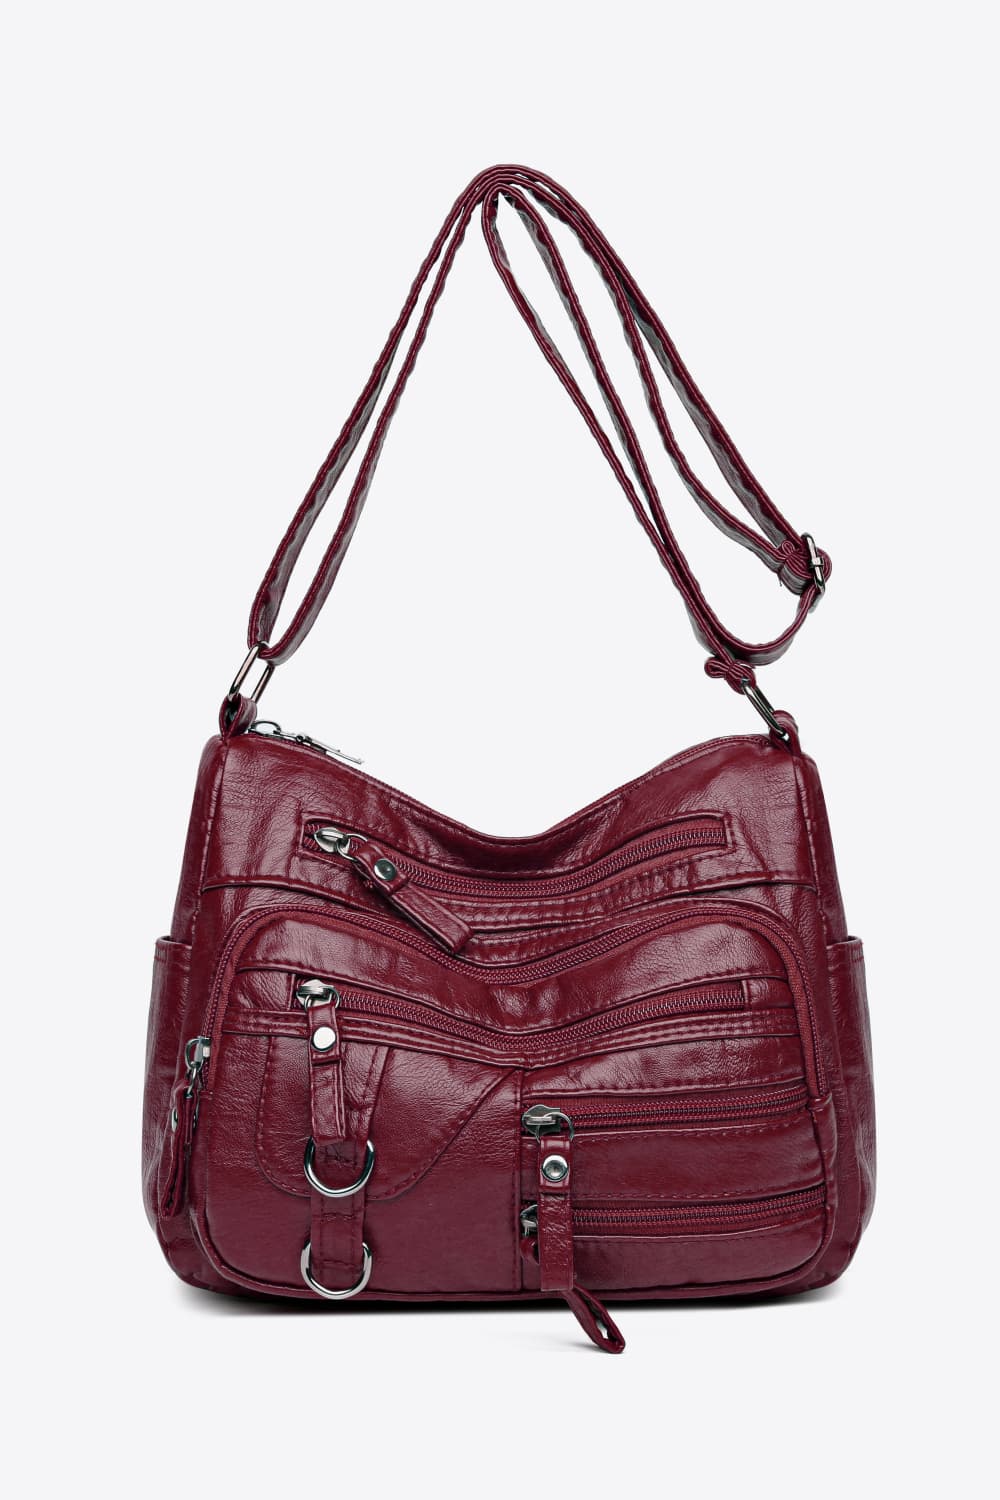 Multi-Pocket PU Leather Crossbody Bag Burgundy One Size